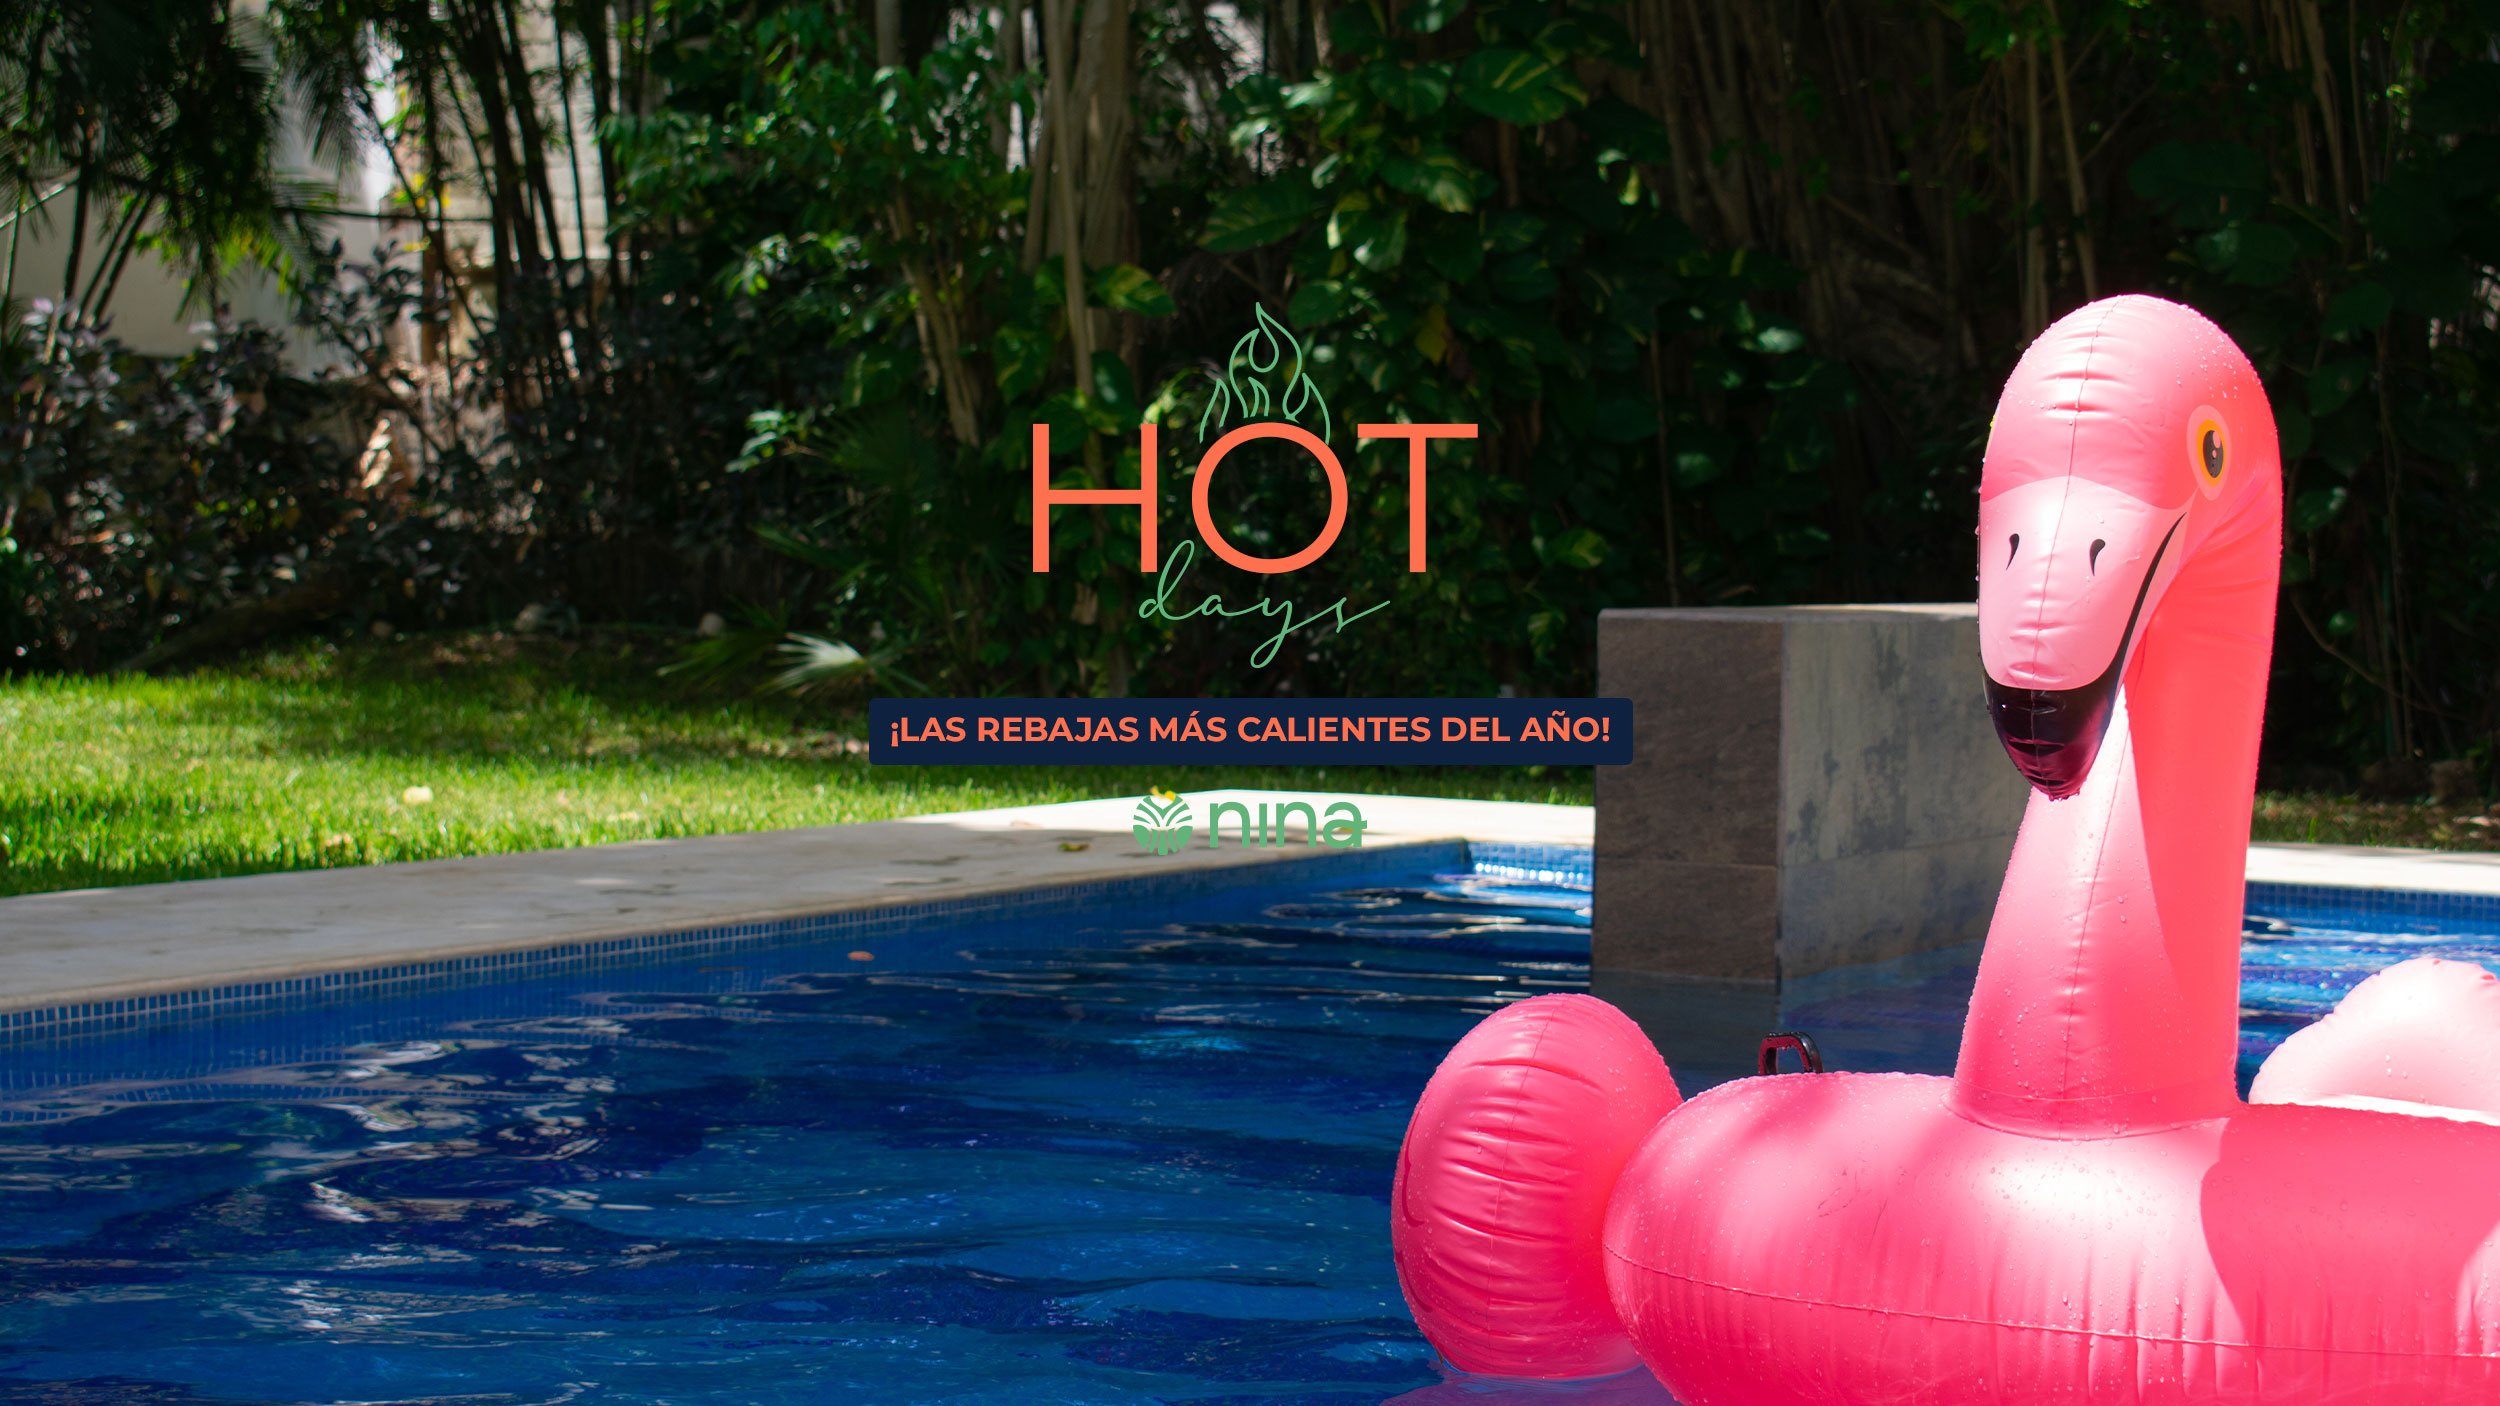 Hot Sale Nina Hotel Playa Del Carmen Portada Web Desktop